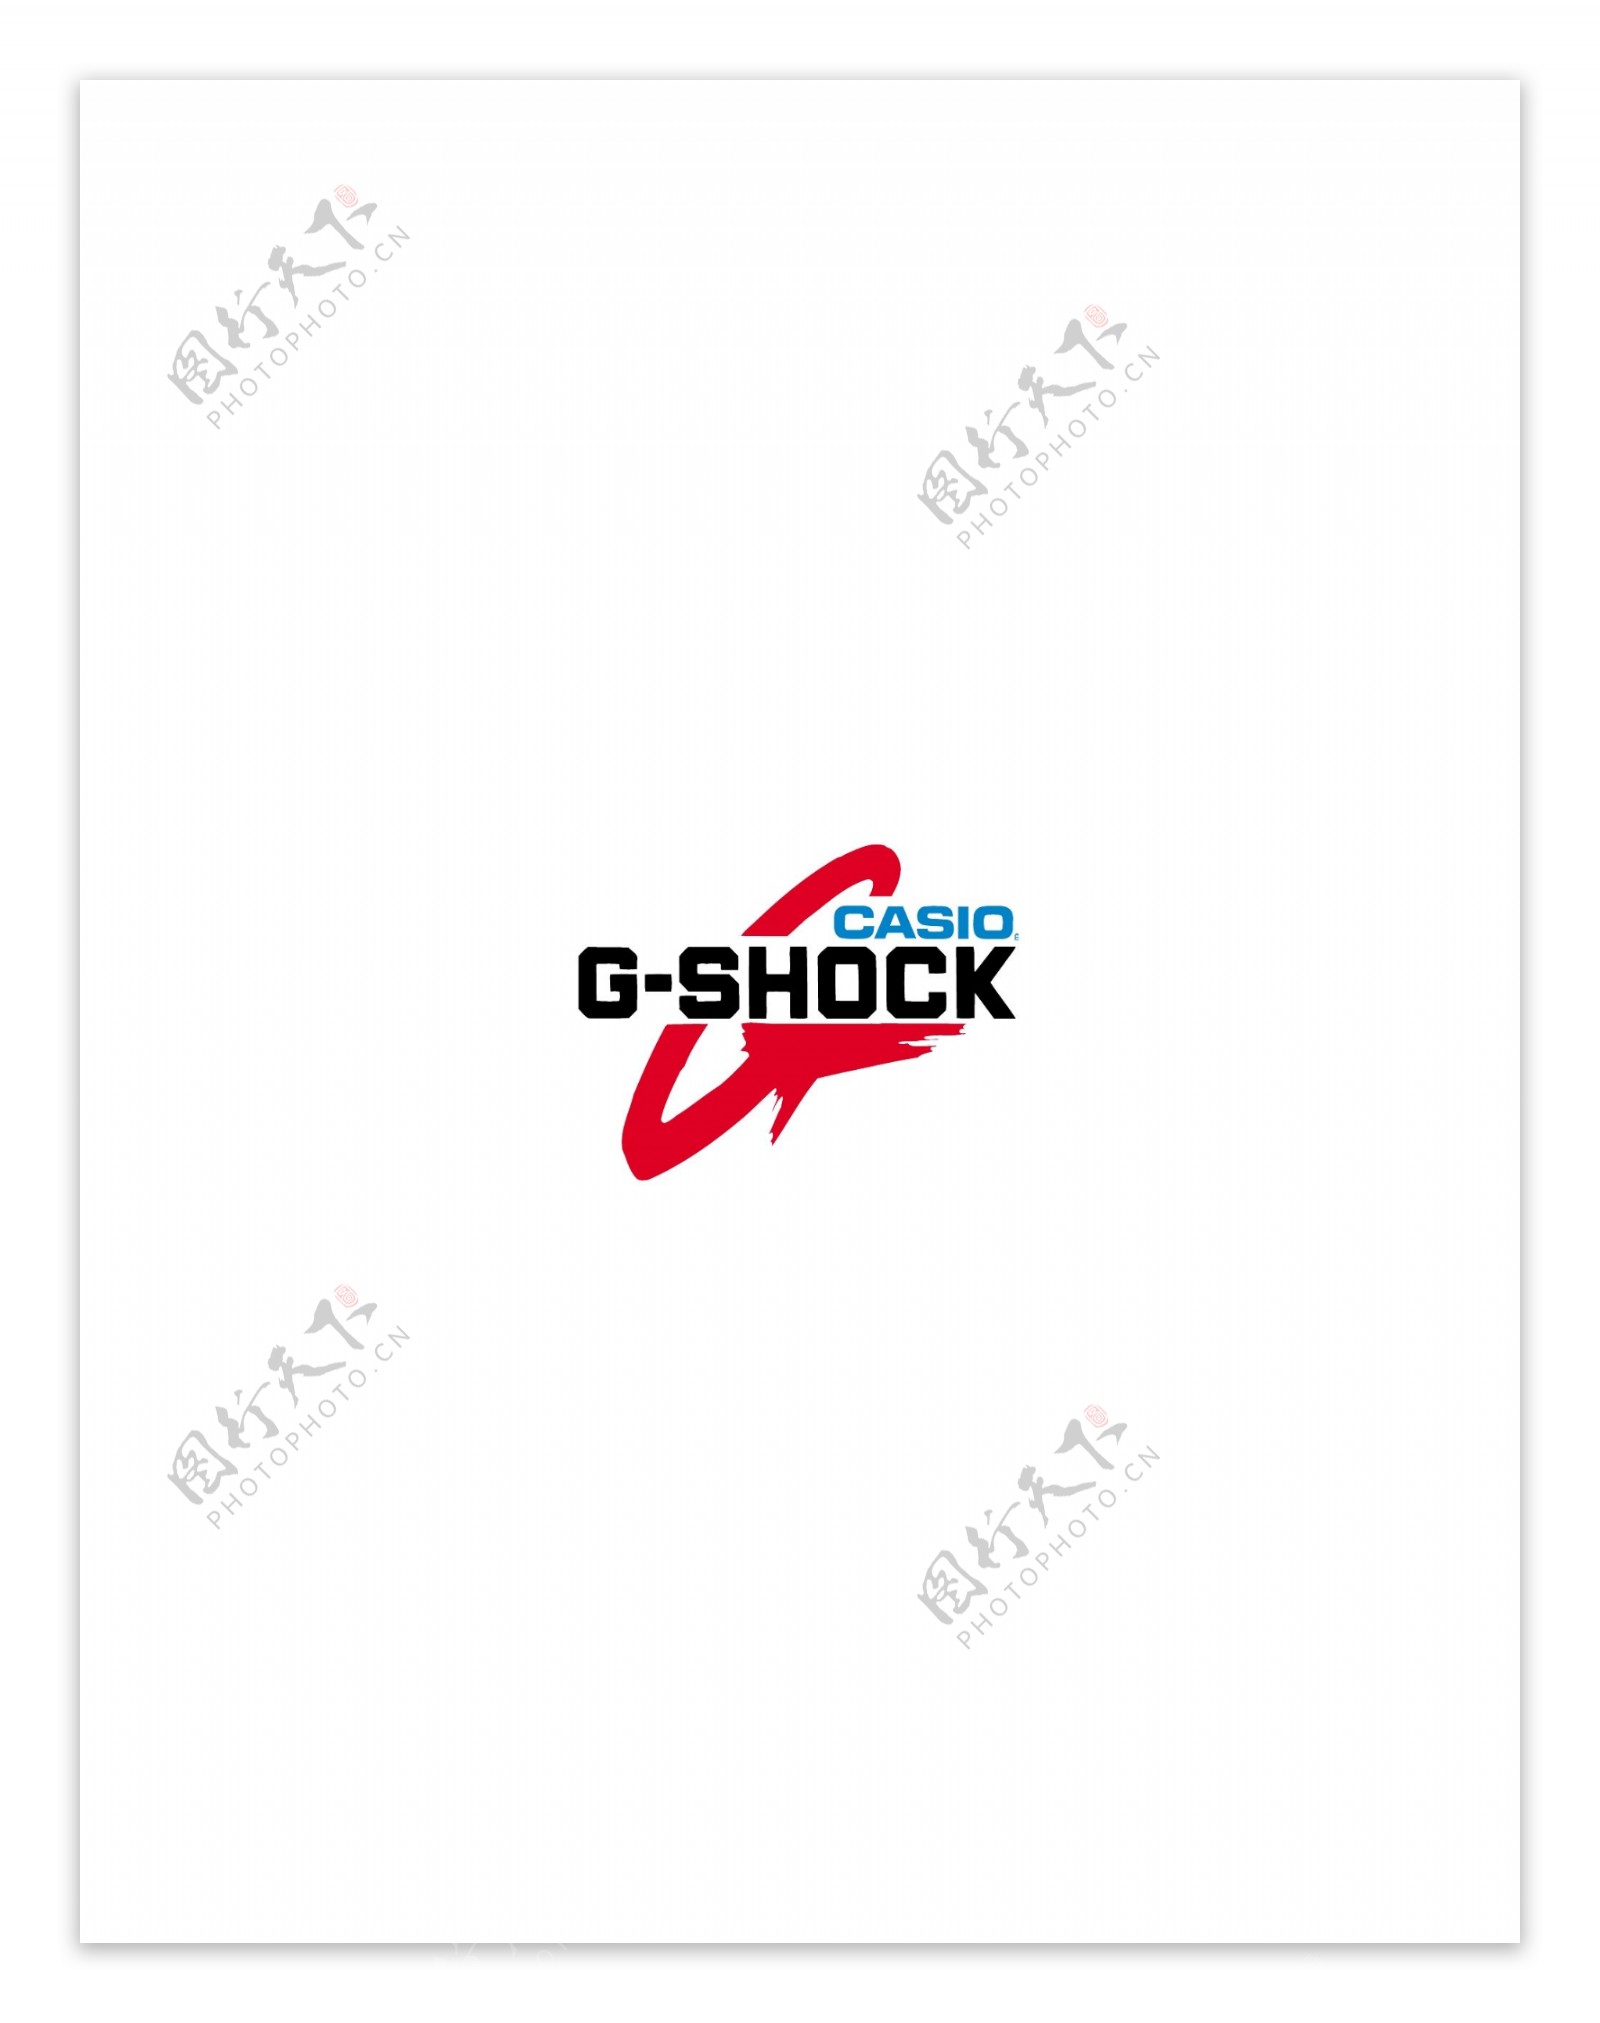 GShockCasiologo设计欣赏国外知名公司标志范例GShockCasio下载标志设计欣赏